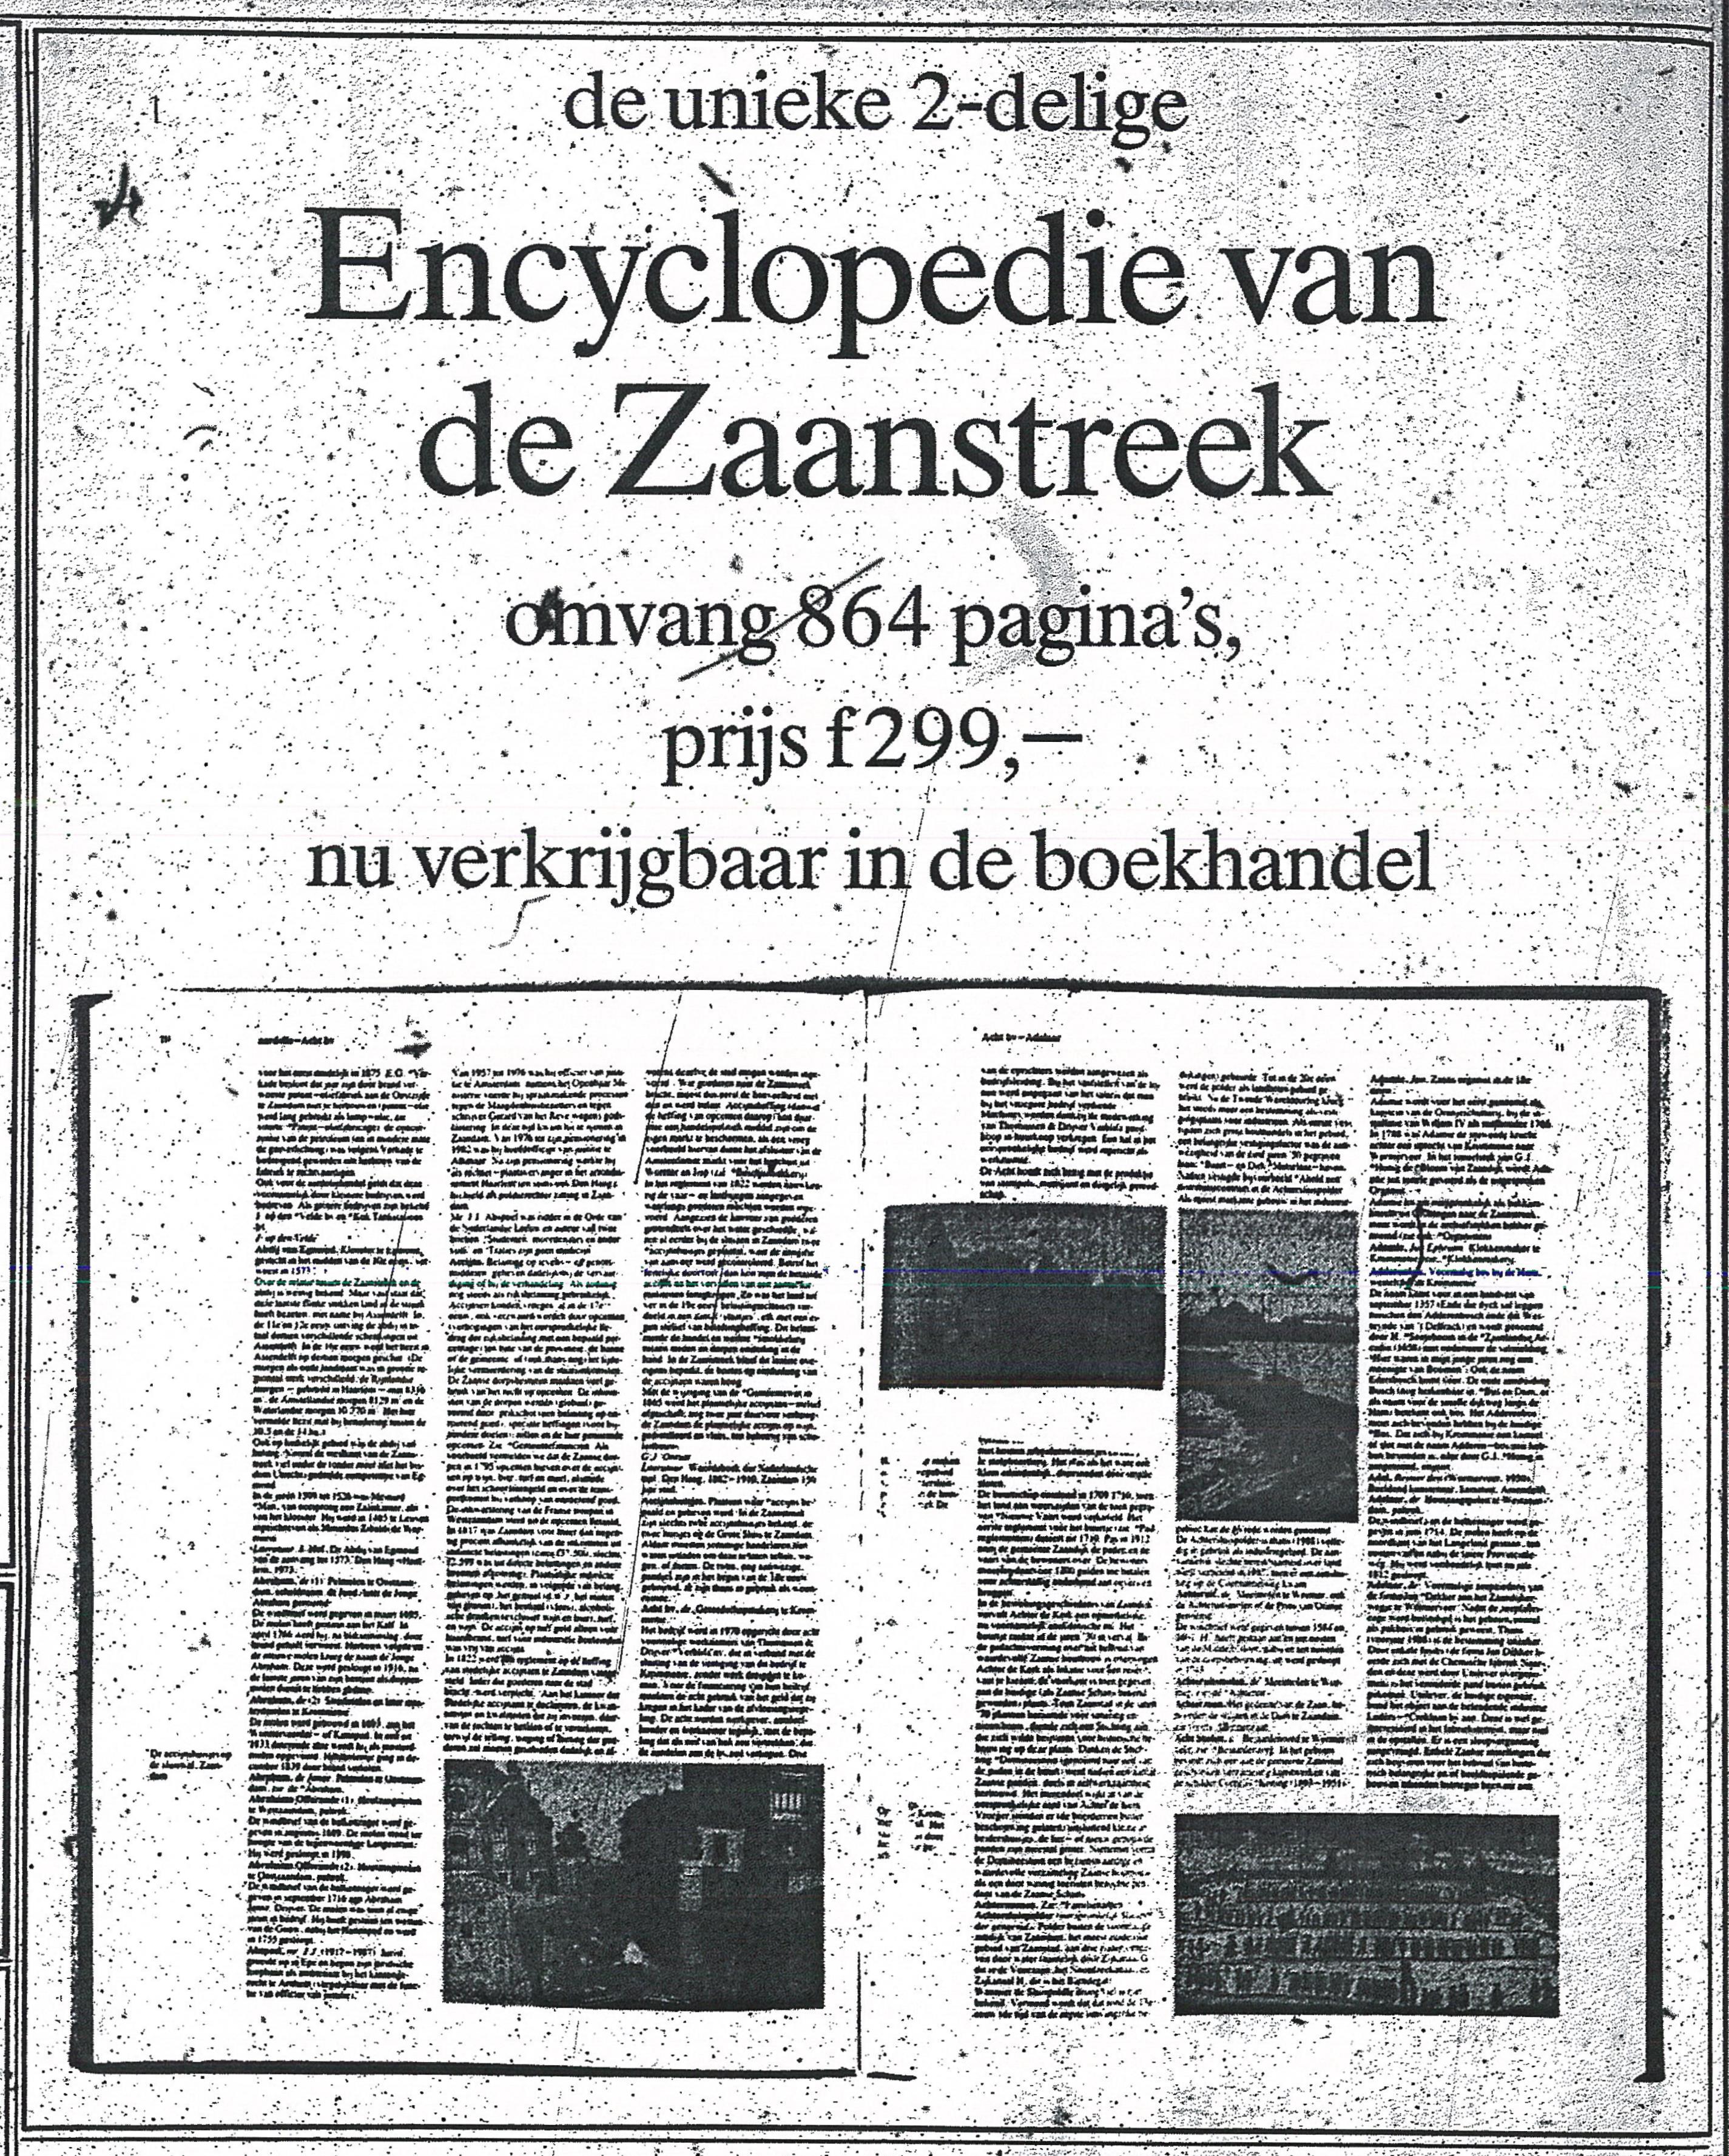 Advertentie Encyclopedie (De Typhoon, 26-10-1991)